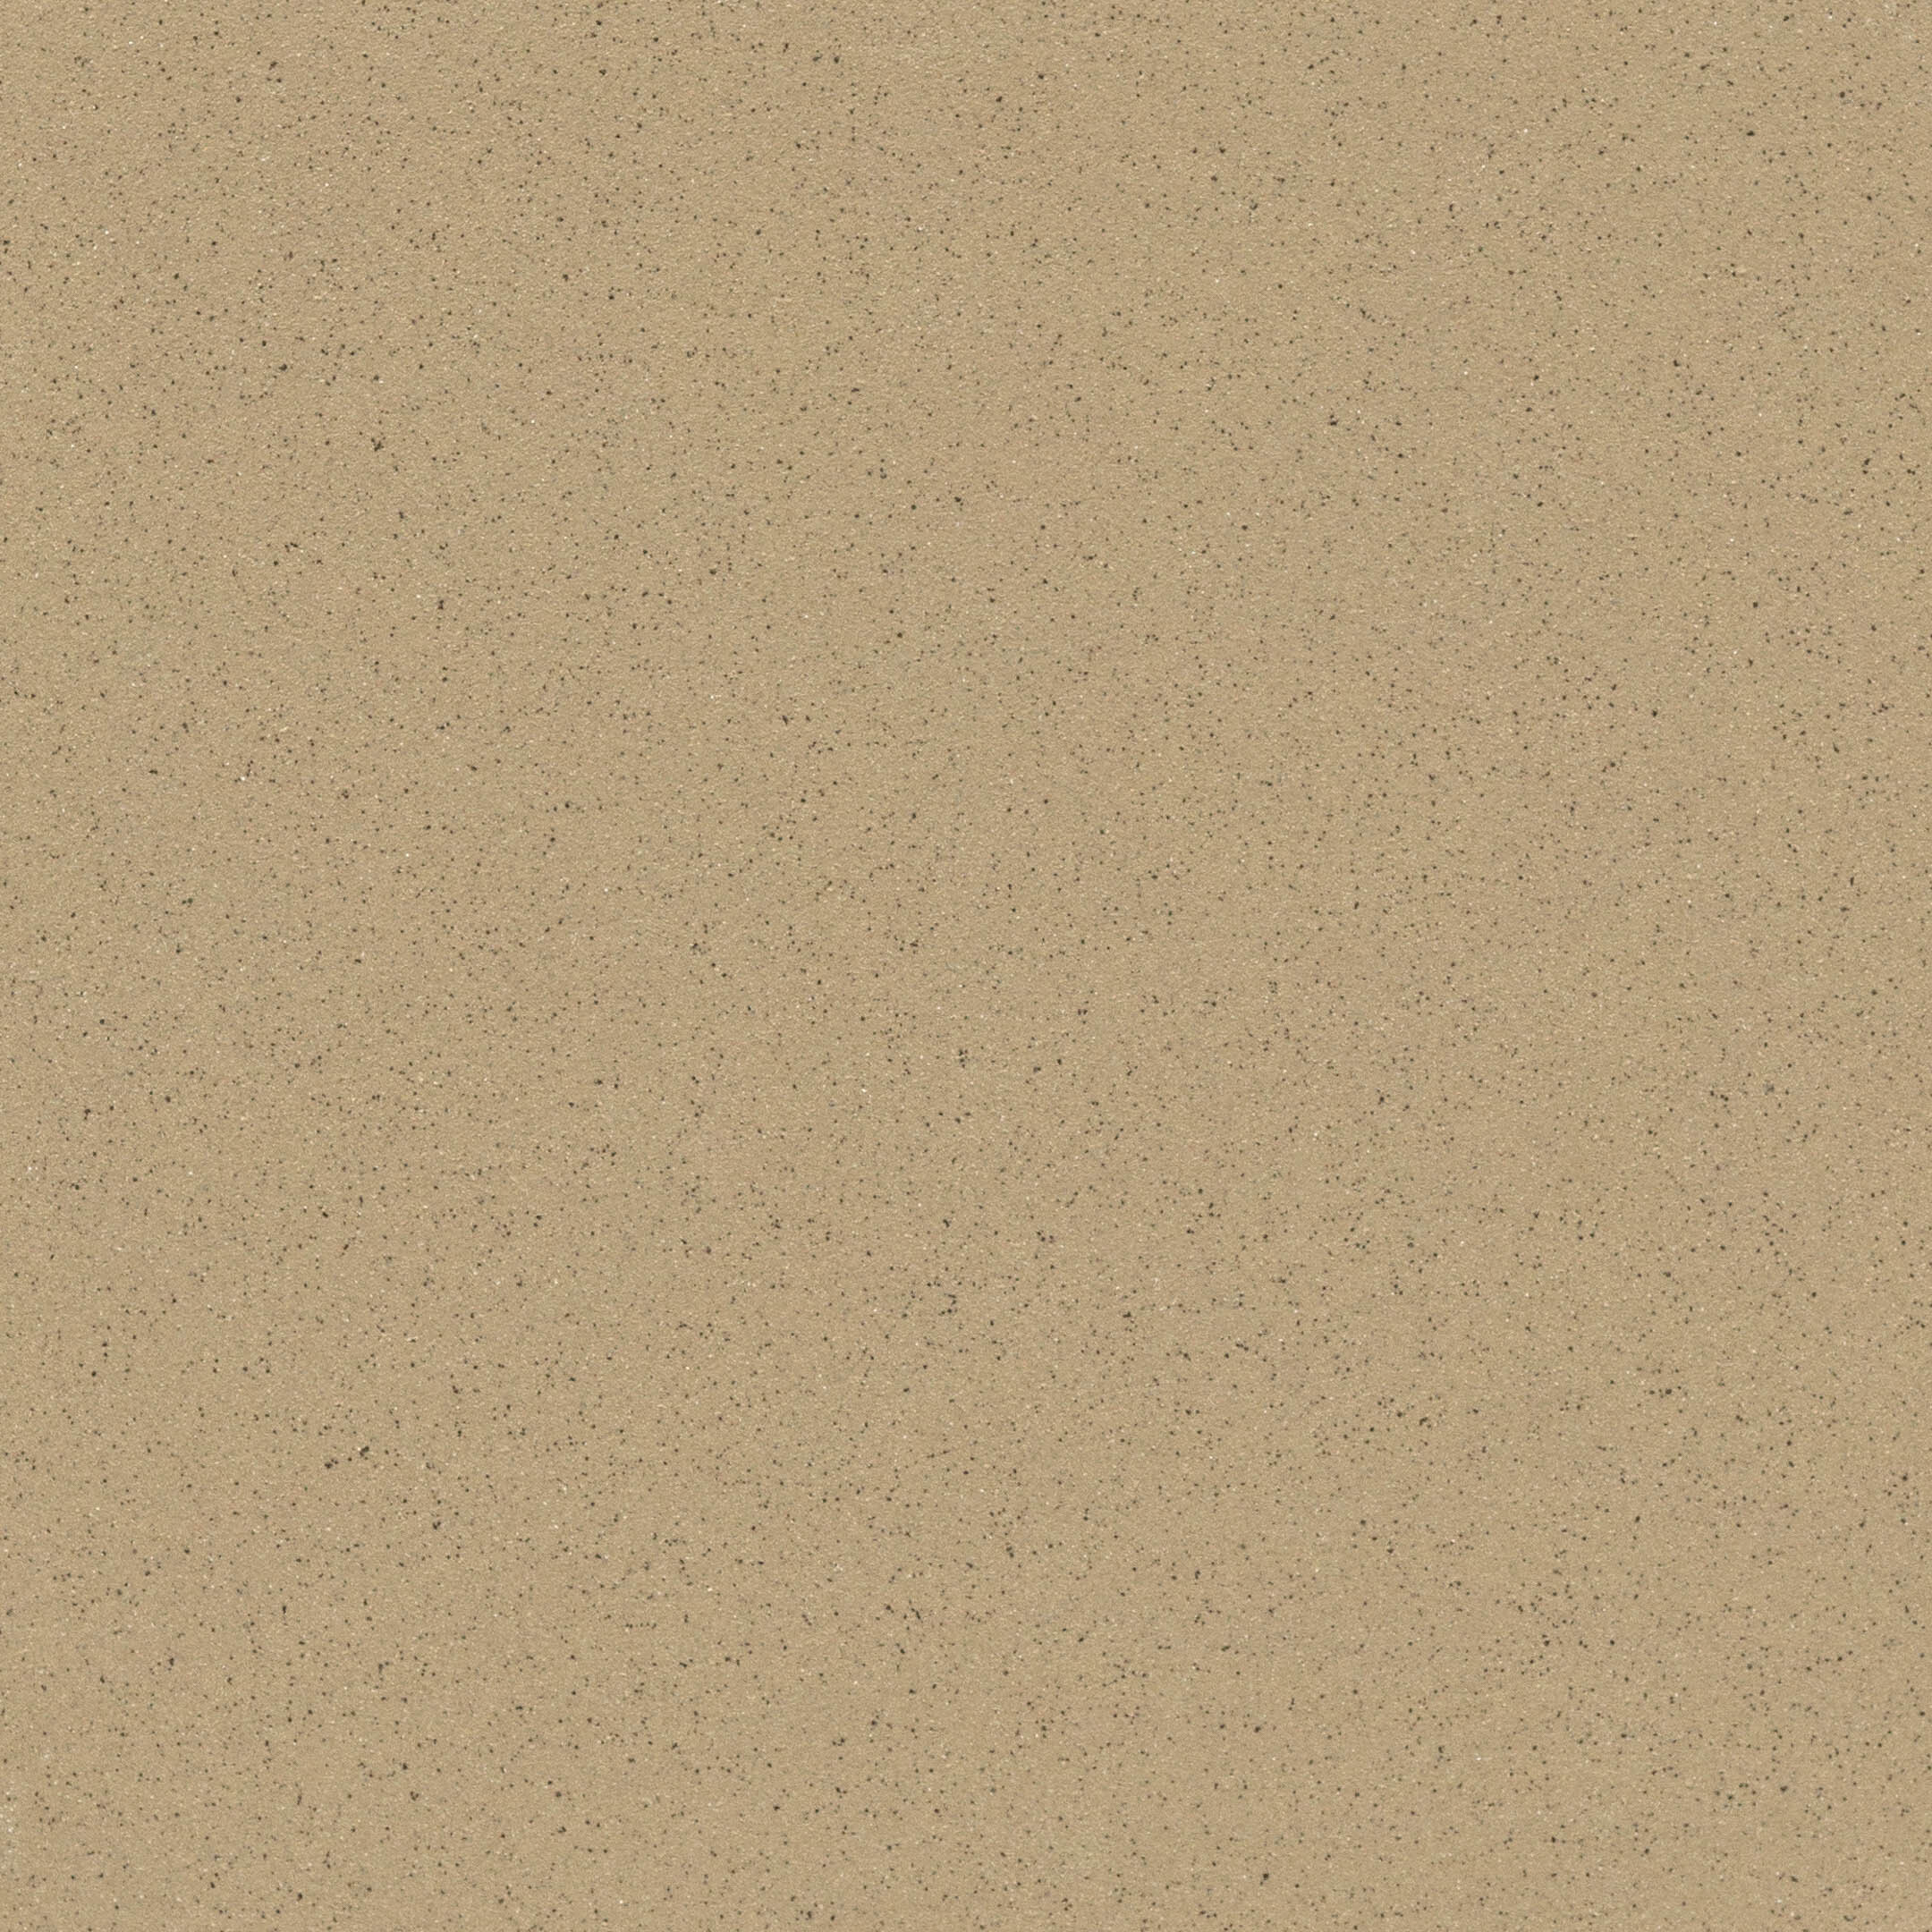 Керамогранит Quadro Decor Грес светло-серый соль-перец 300х300х7 мм (17 шт.=1,53 кв.м) керамогранит quadro decor соль перец 30x30 см 0 99 м² матовый цвет серый